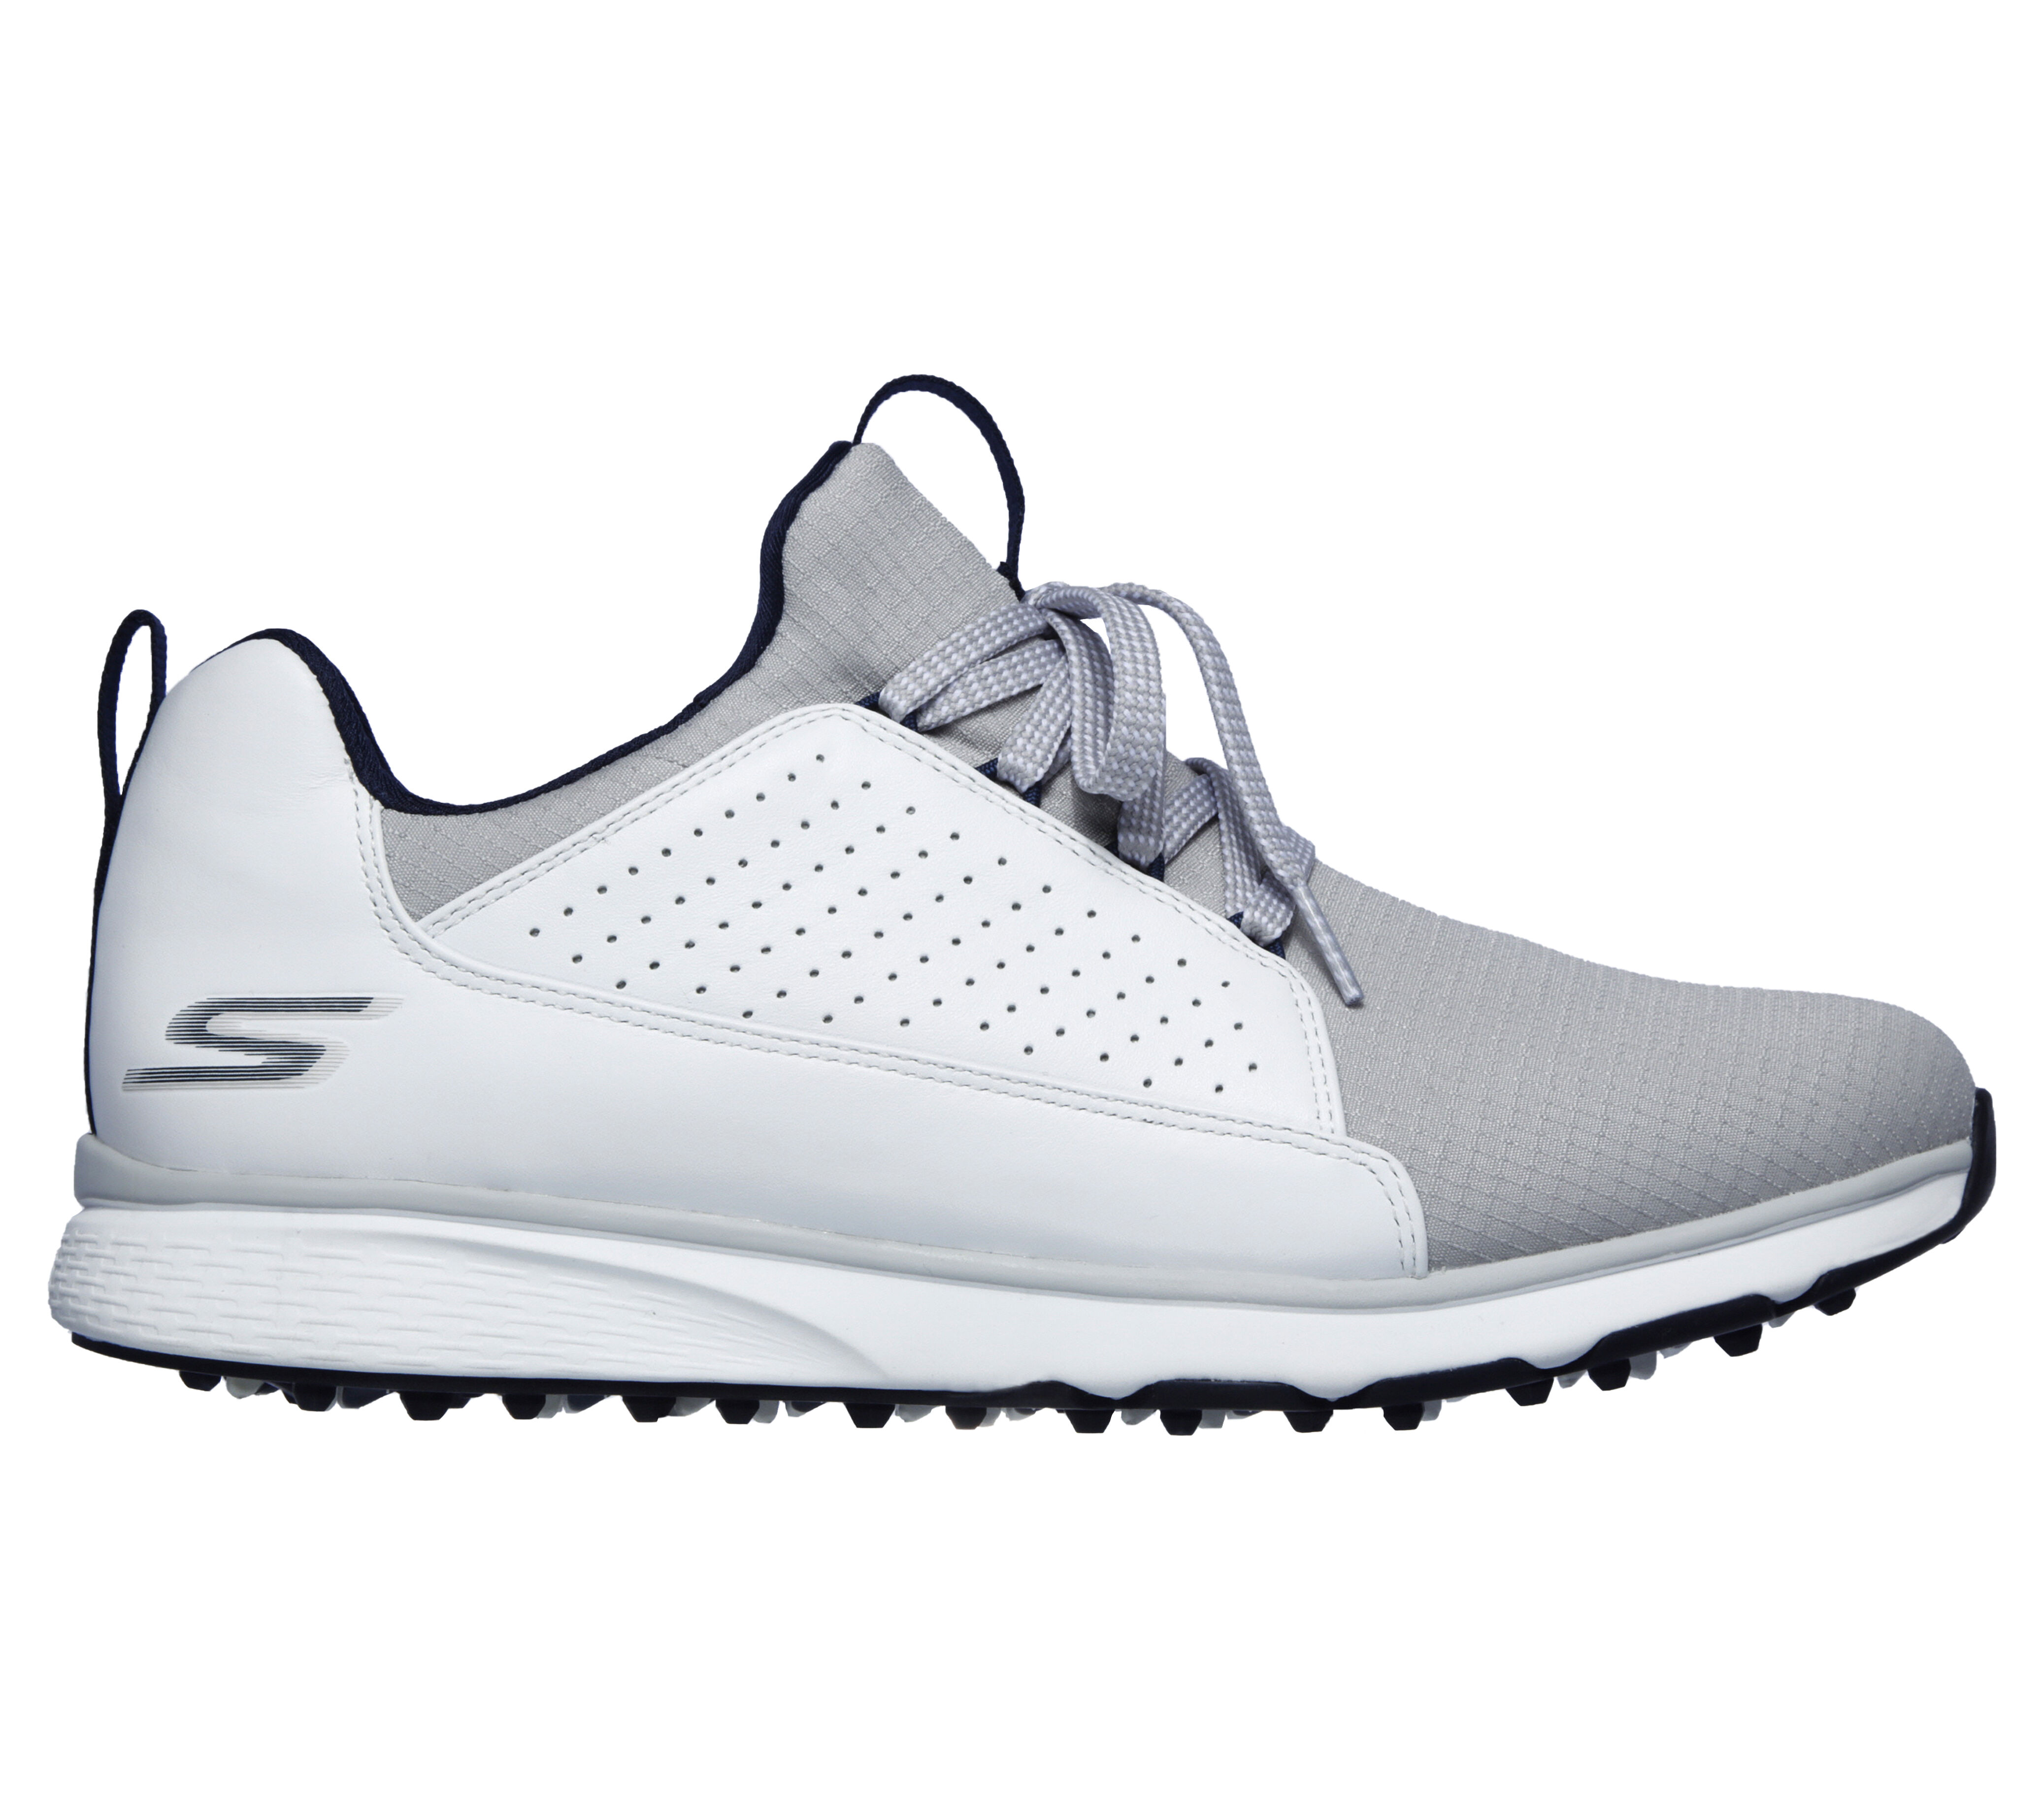 waterproof skechers golf shoes